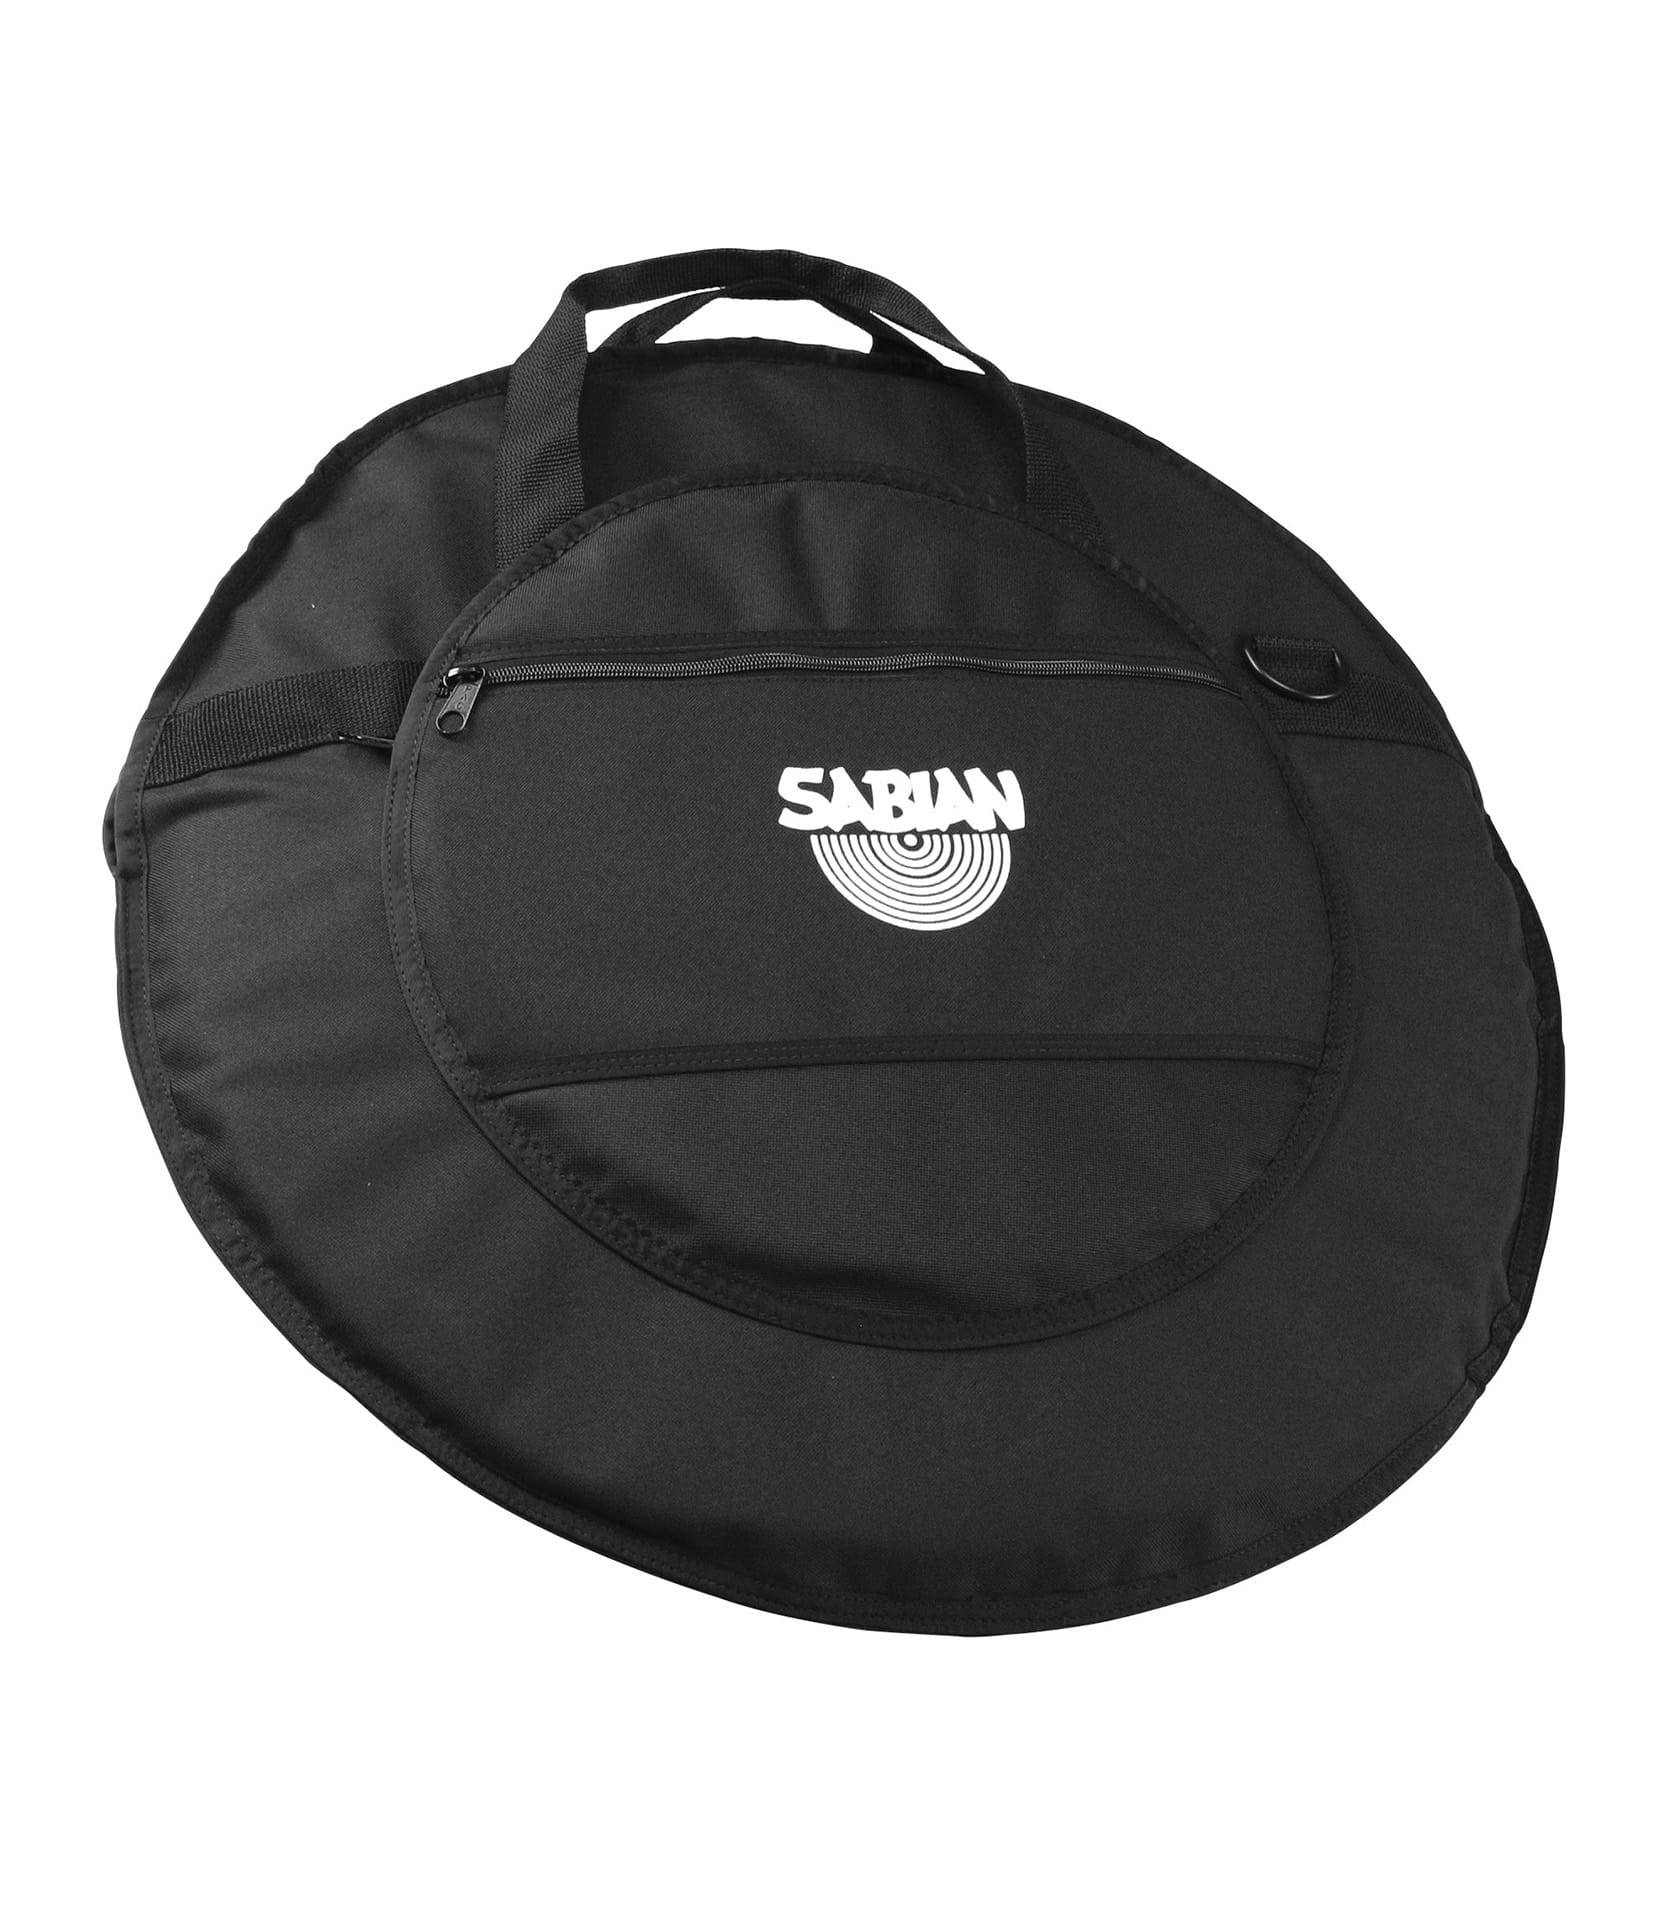 Sabian - 22 Inch Standard Foam Padded Cymbal Bag